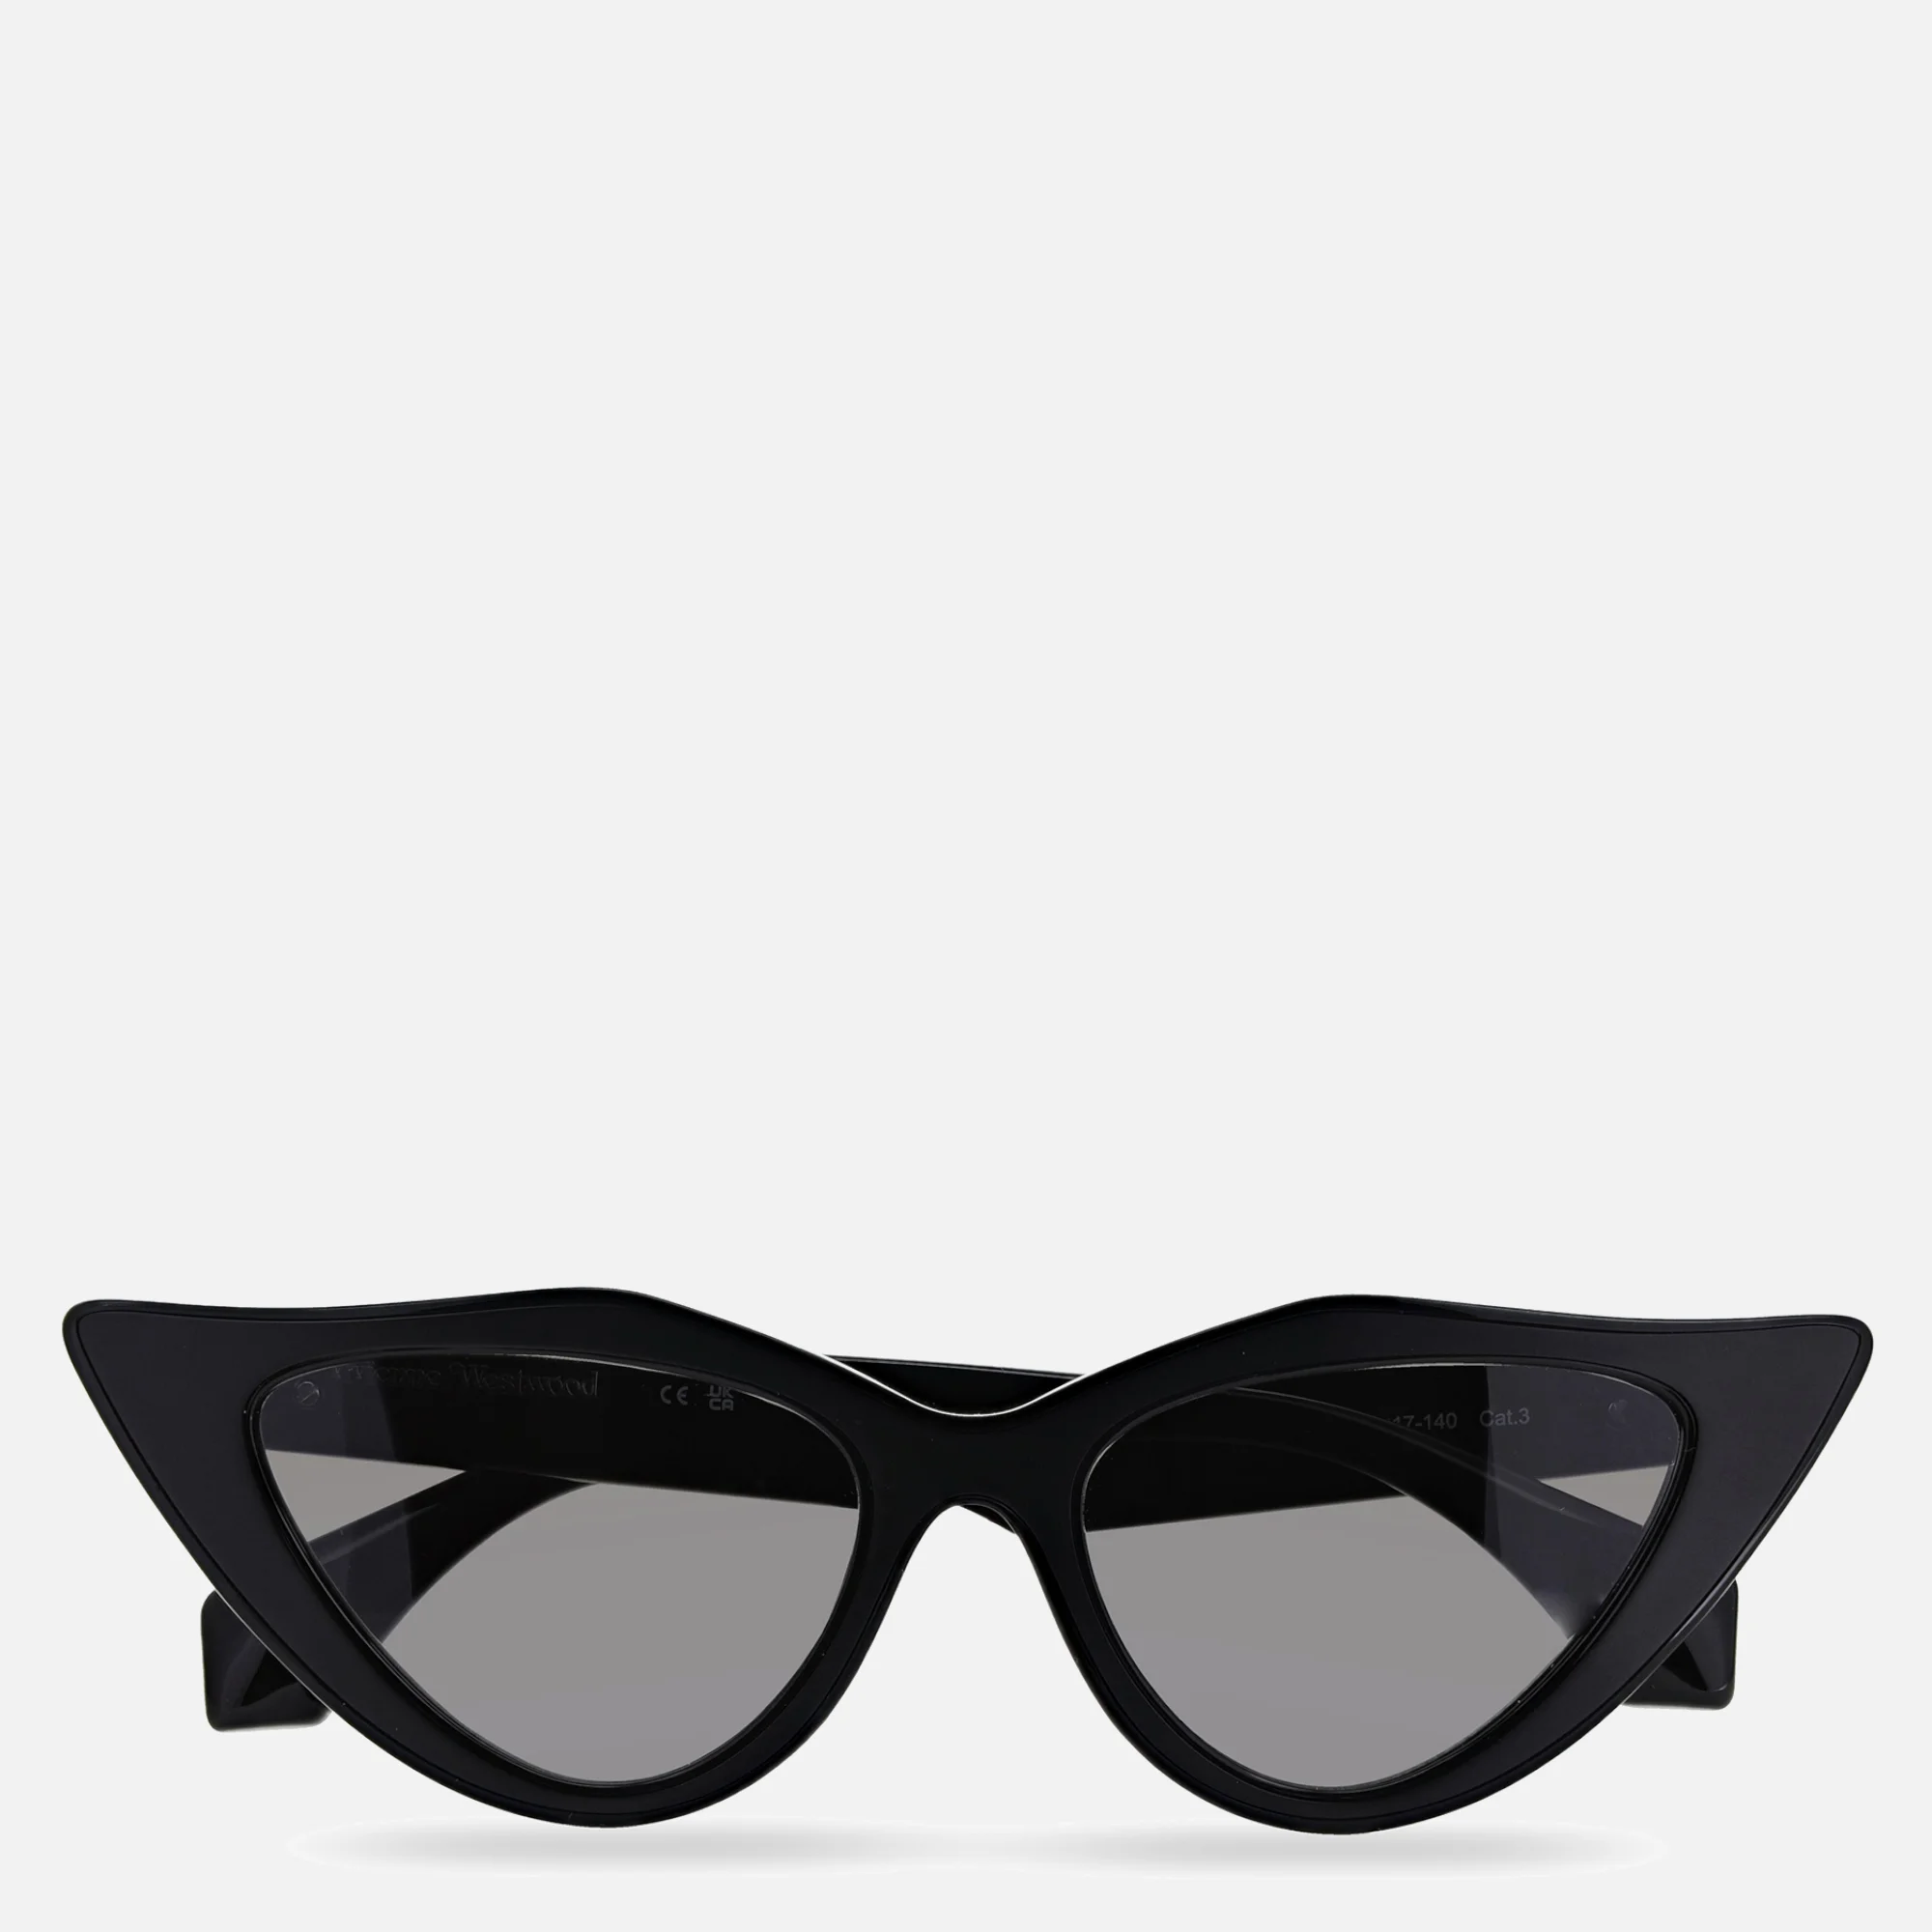 Vivienne Westwood Women's Anouk Cat Eye Acetate Sunglasses - Black Image 1